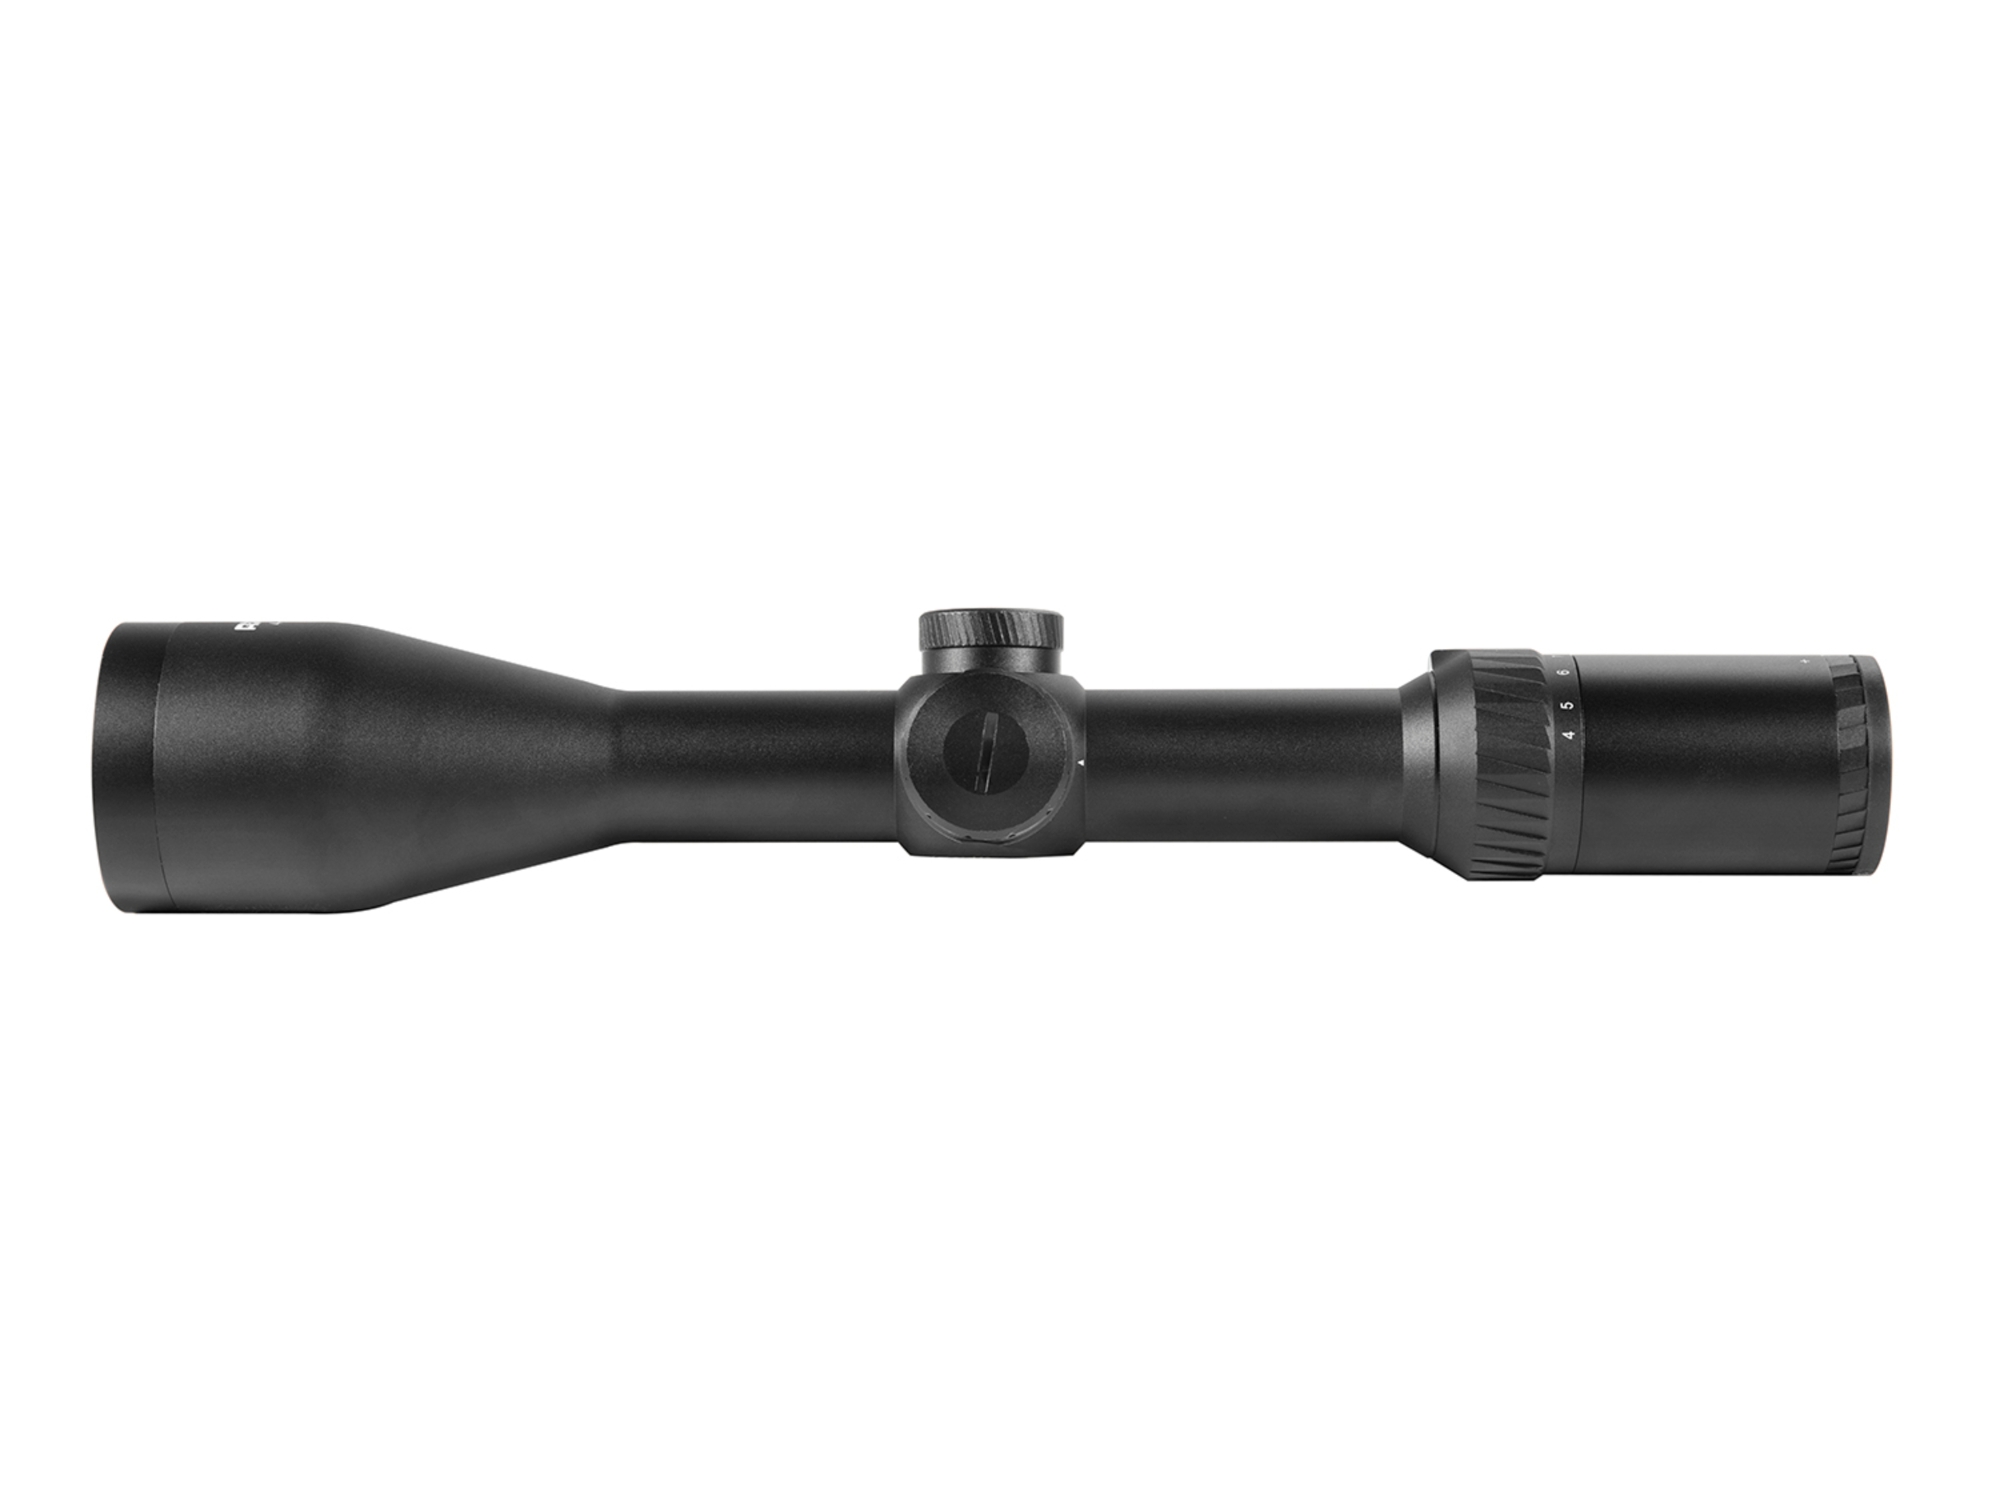 Axeon 4-16x50 IGR : Dog Soldier Predator Rifle Scope